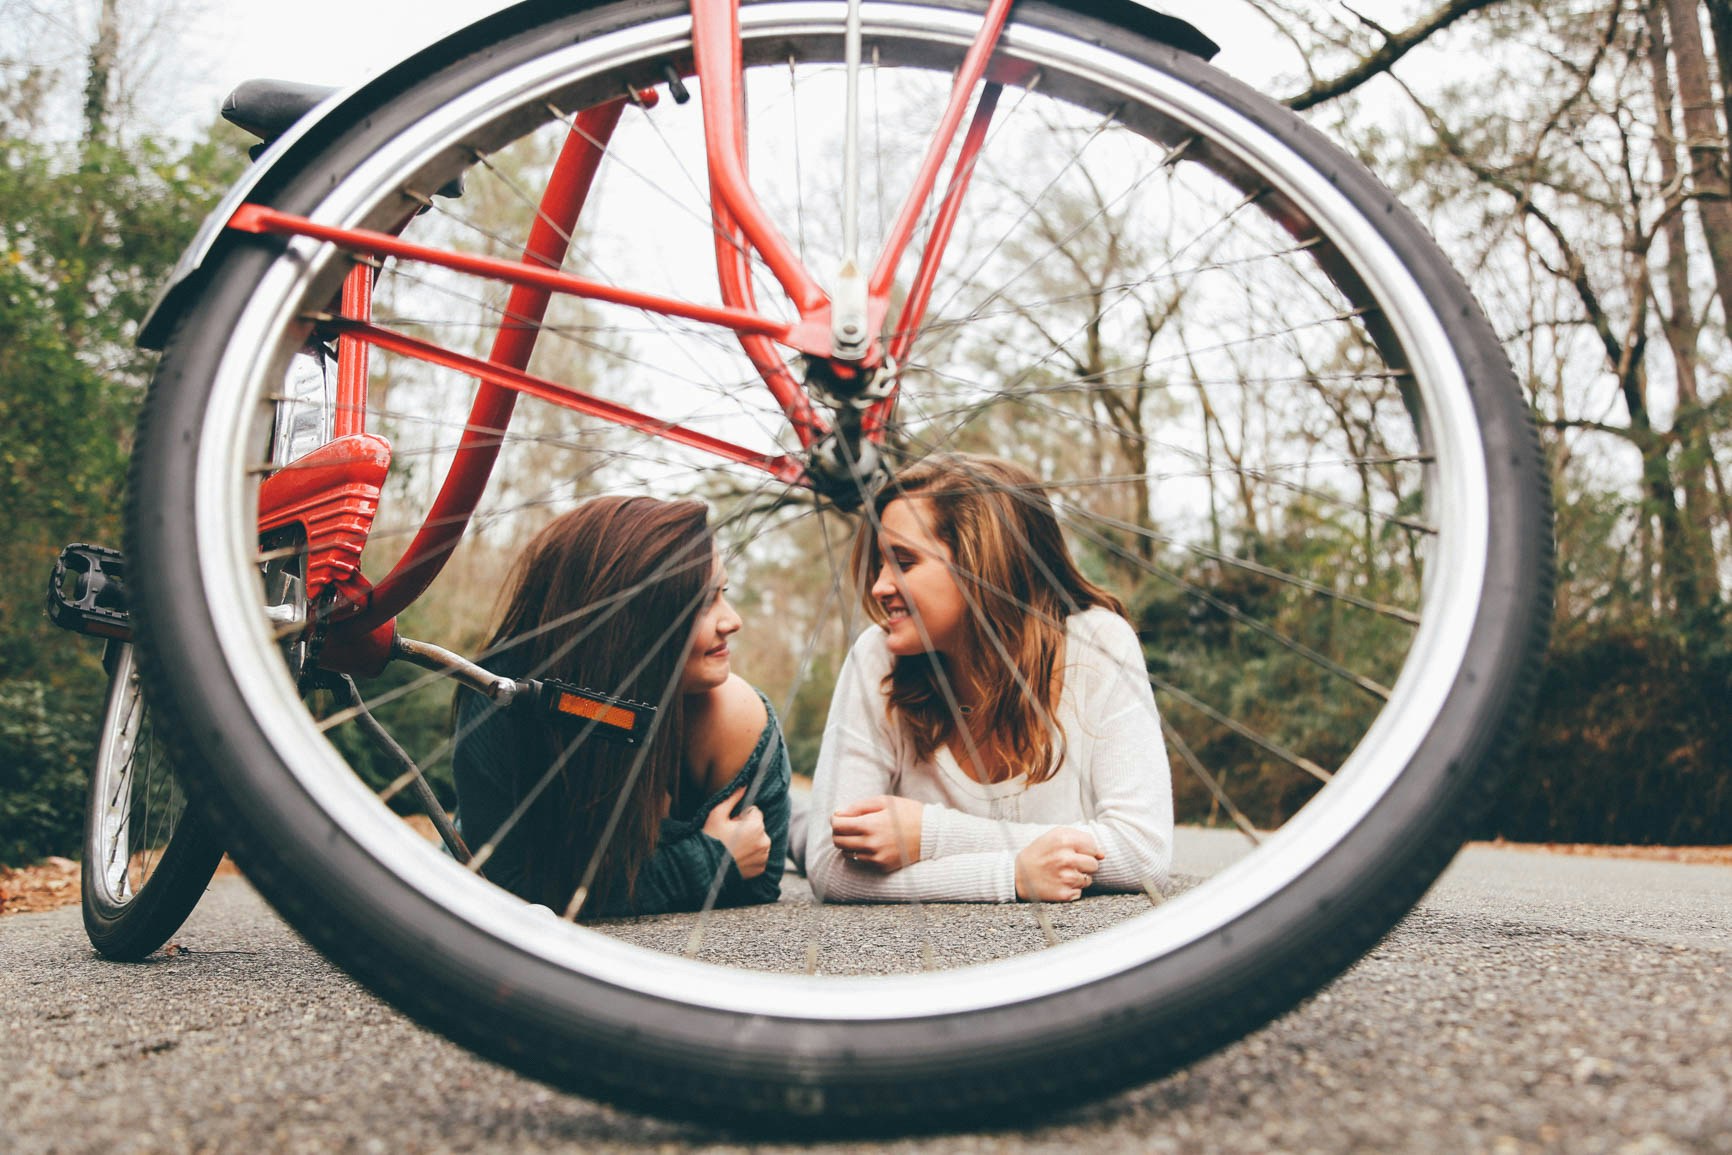 Smiling girls and a bike